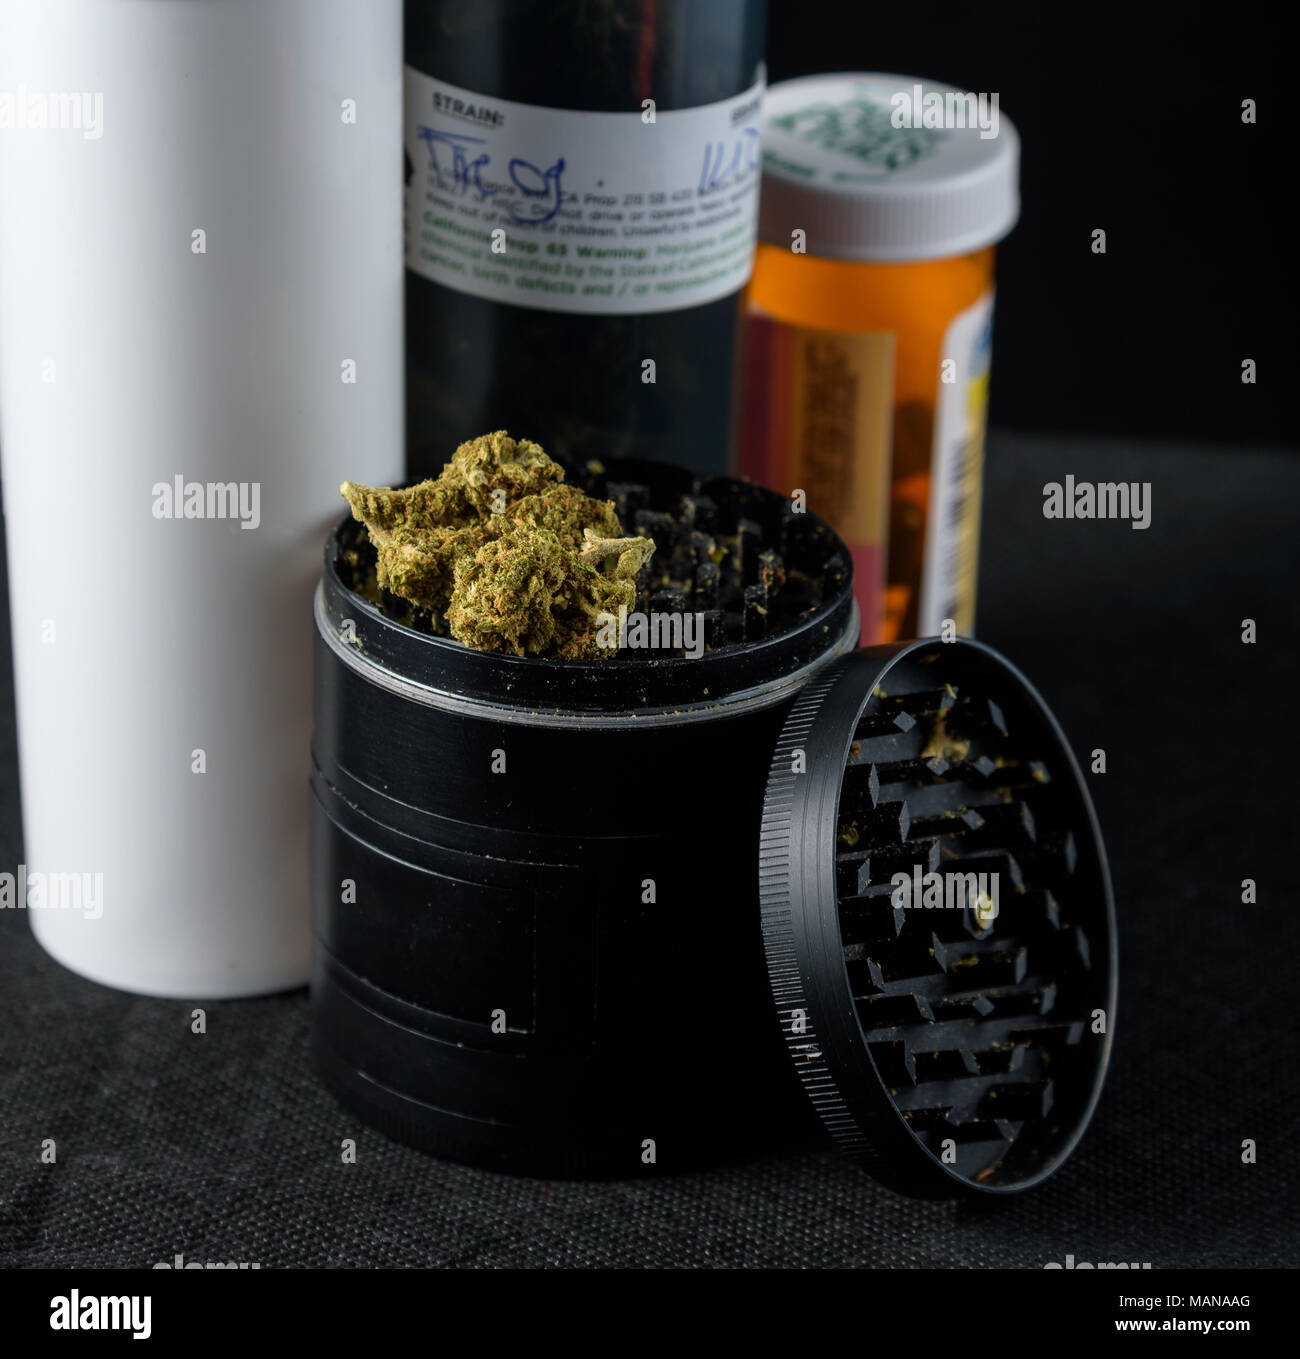 prescription bottles of medical marijuana next to a grinder with buds. Black background Stock Photo